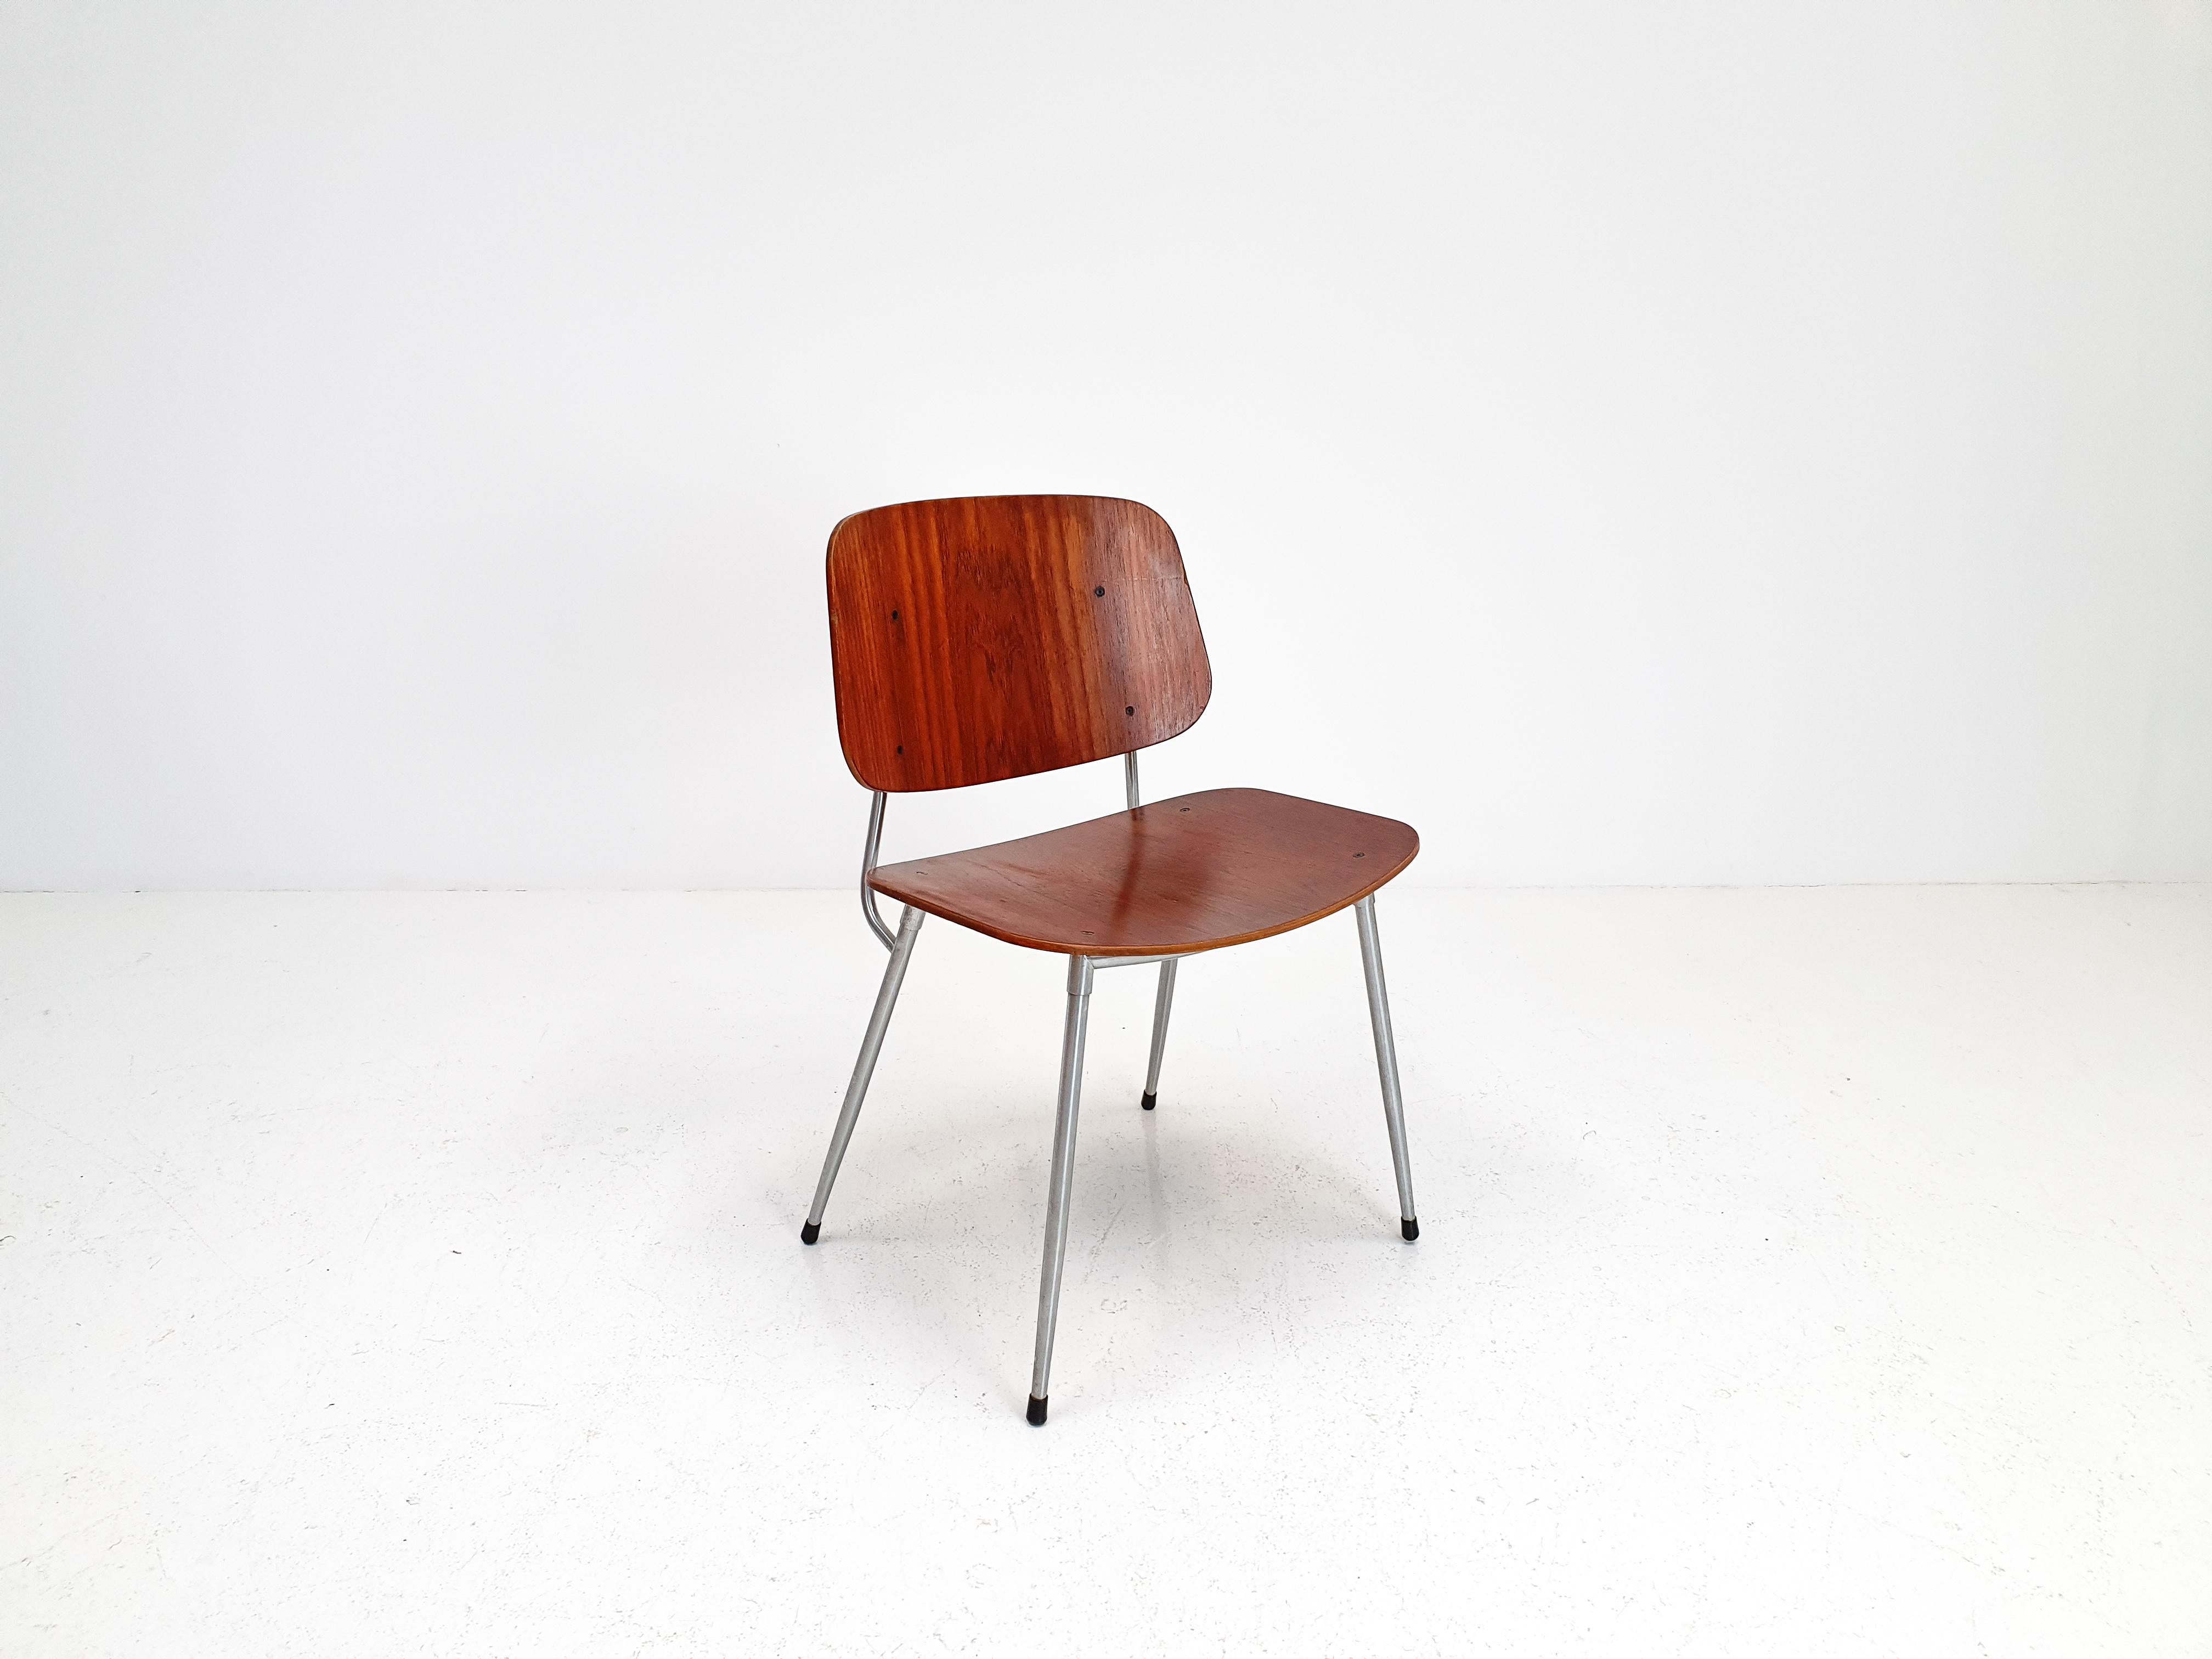 Danish Plywood and Steel Chair by Børge Mogensen, Søborg Møbelfabrik, Denmark, 1953